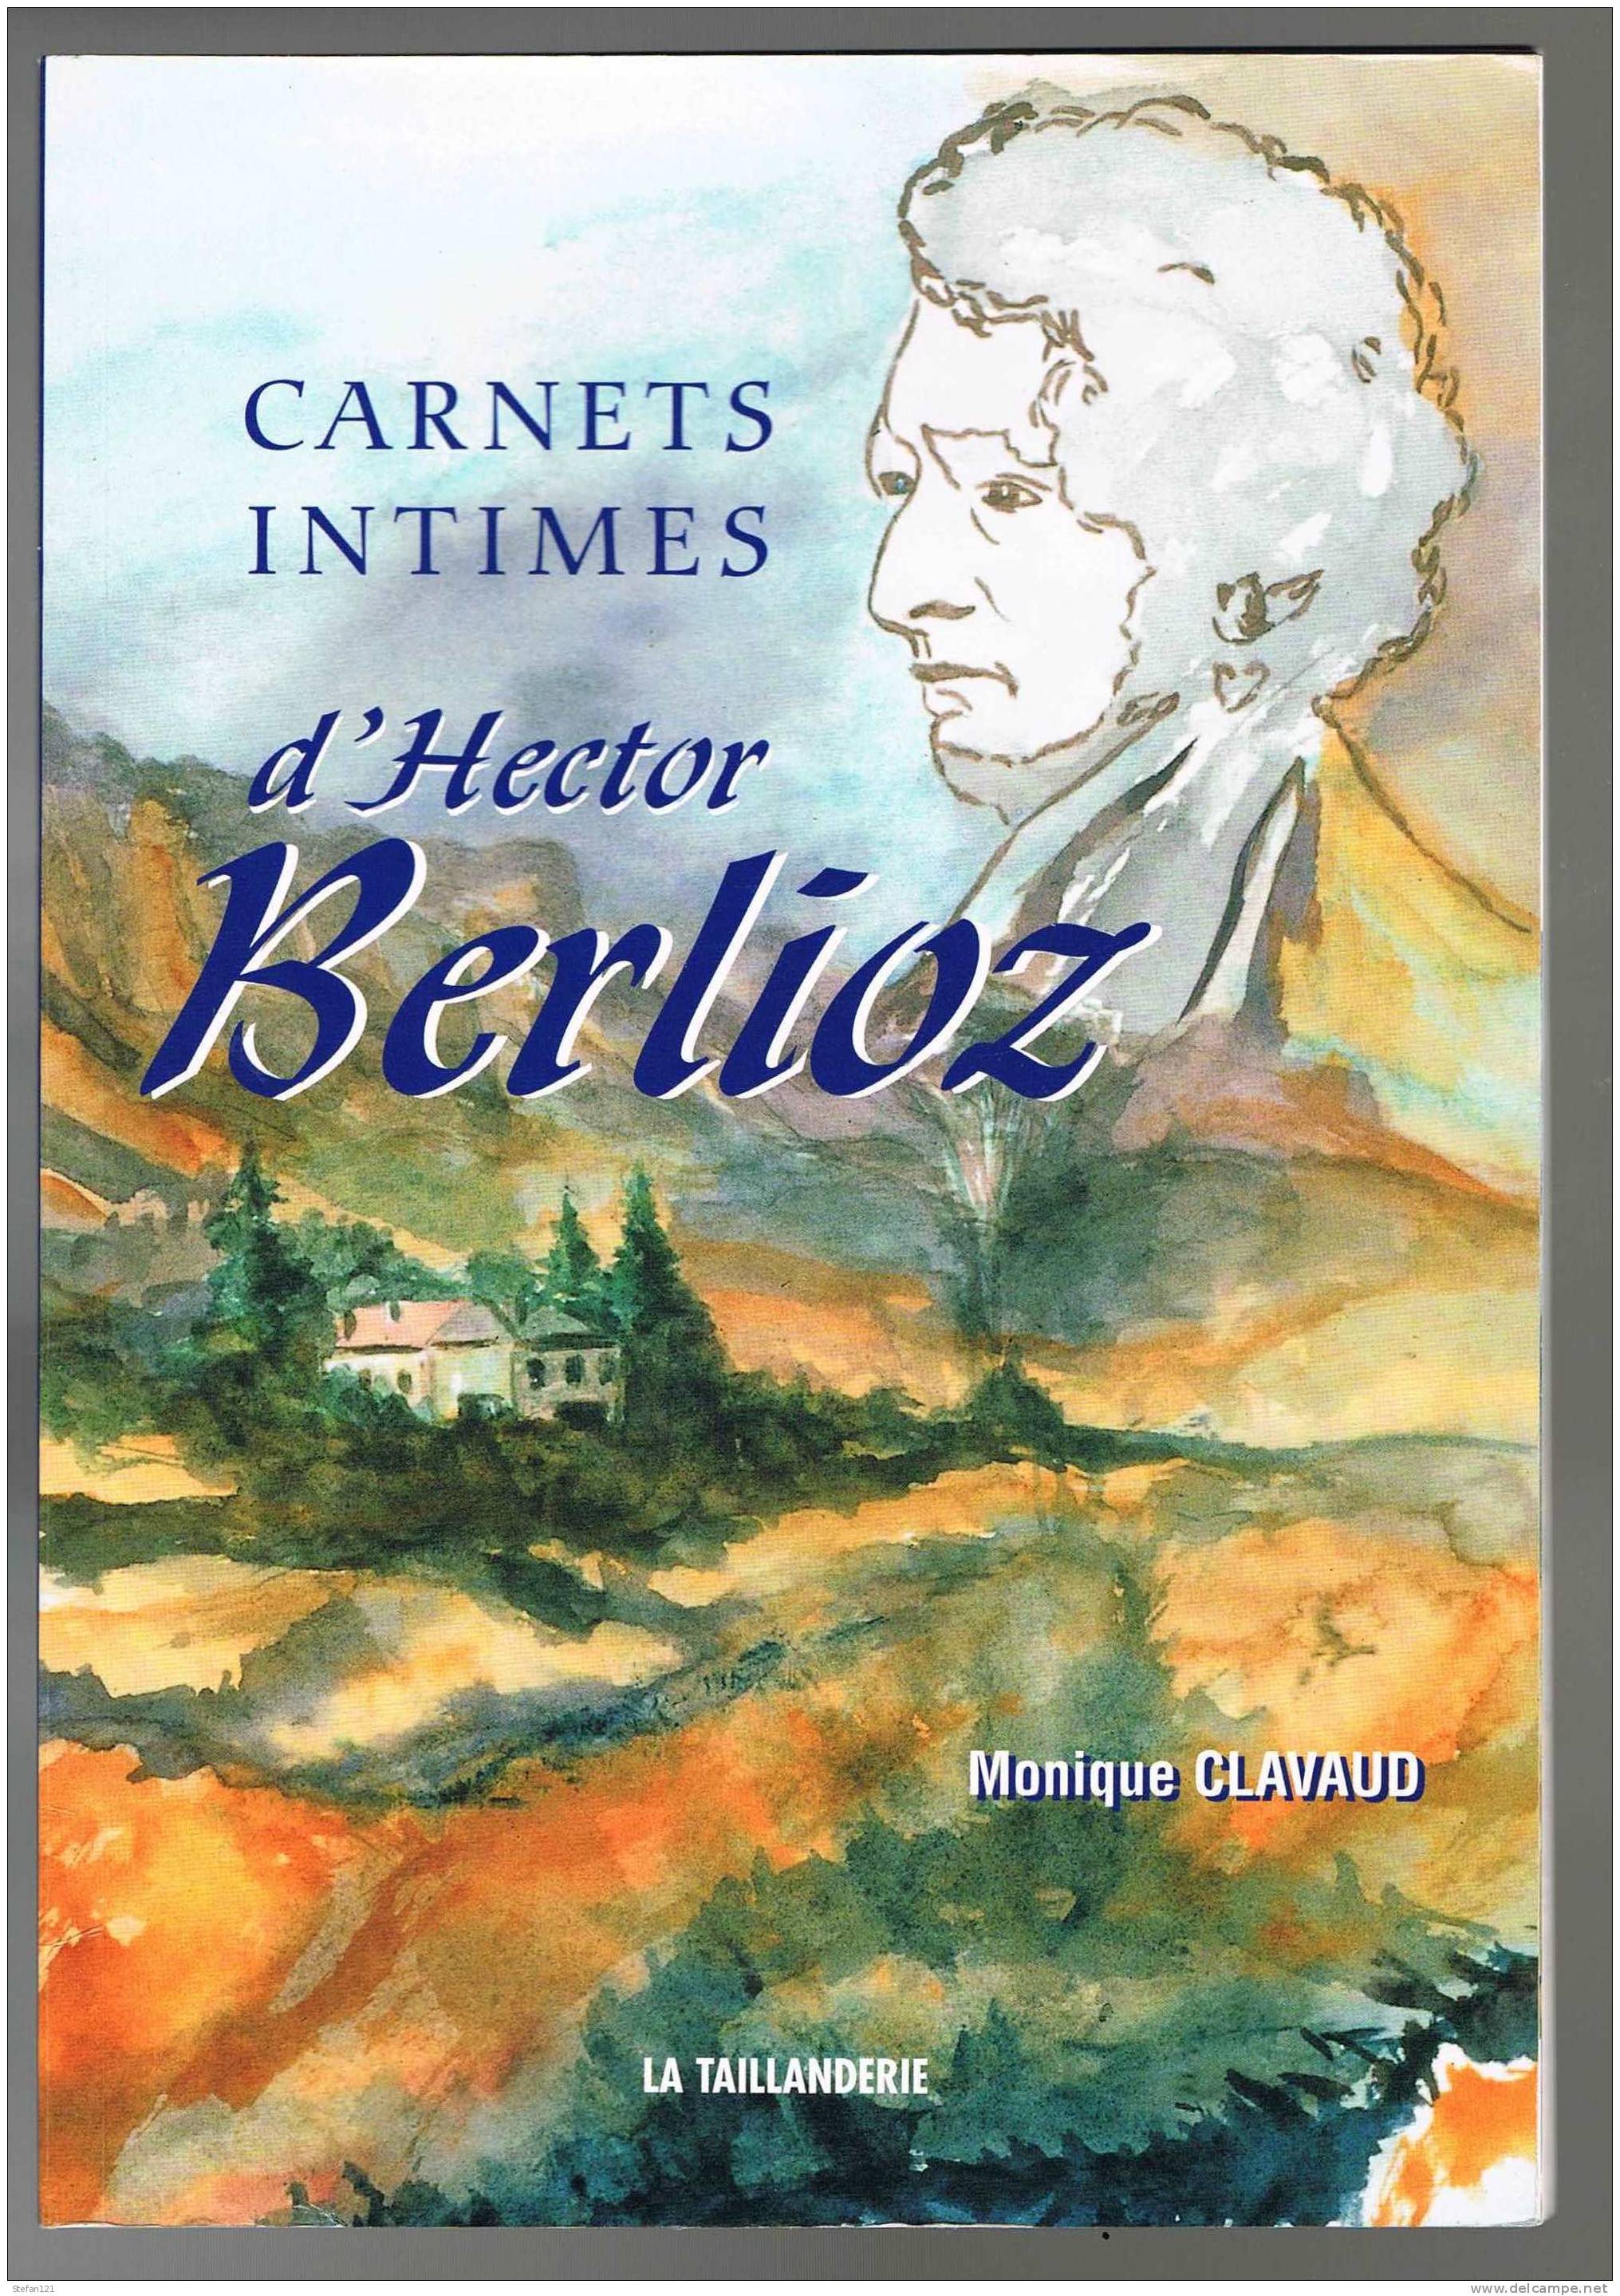 Carnets Intimes D'Hector Berlioz - Monique Clavaud - 2003 -  La Taillanderie - 64 Pages - 23,2 Cm X 16,2 Cm - Musica